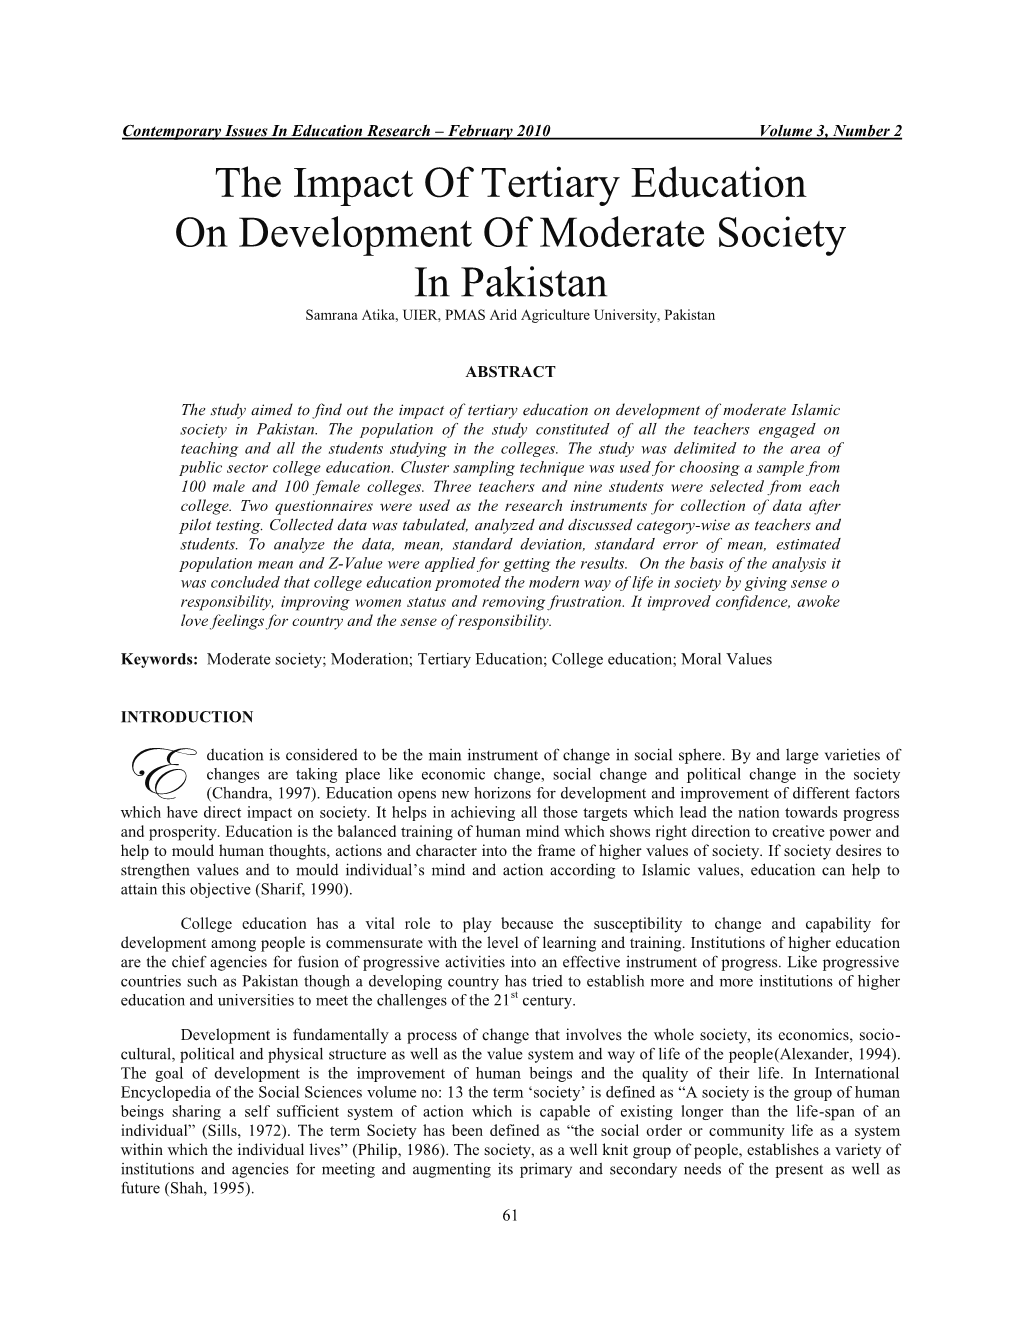 The Impact of Tertiary Education on Development of Moderate Society in Pakistan Samrana Atika, UIER, PMAS Arid Agriculture University, Pakistan